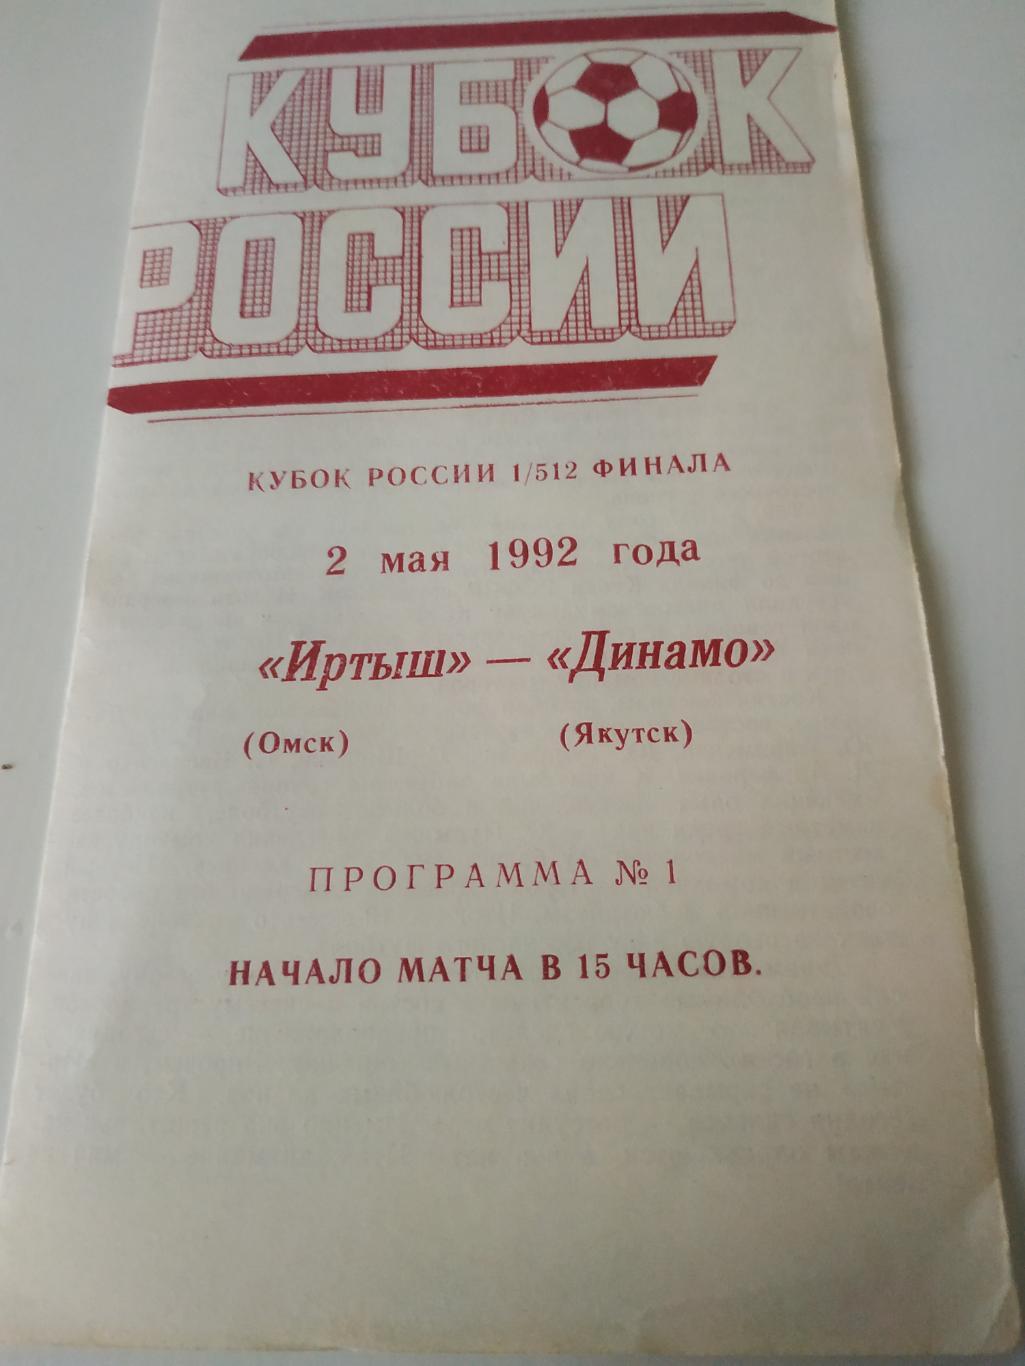 Иртыш Омск - Динамо Якутск 1992 кубок России